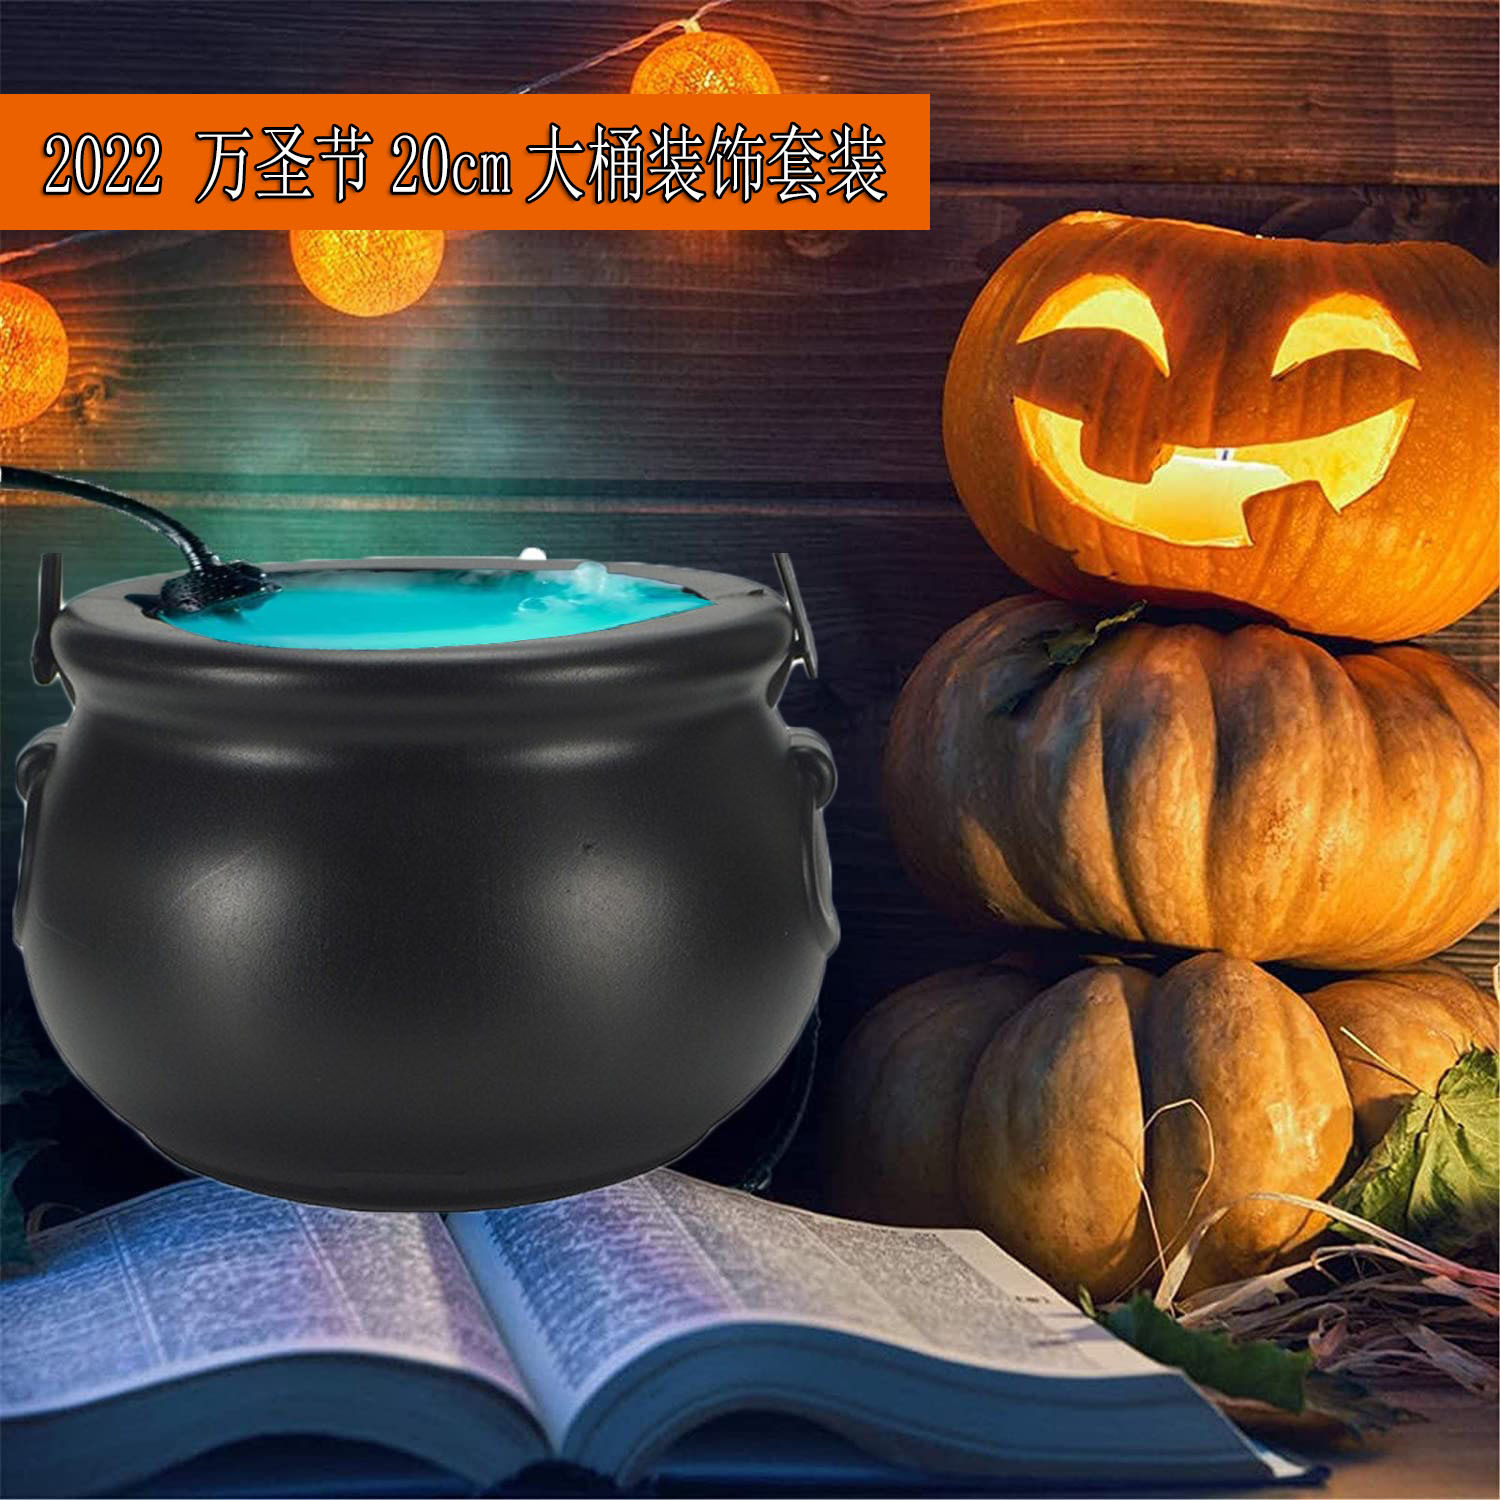 Halloween Party Mist Maker, Halloween Witch Cauldron Fog Maker, Water Fountain Pond Fog Atomizer, Halloween Party Prop Decorations